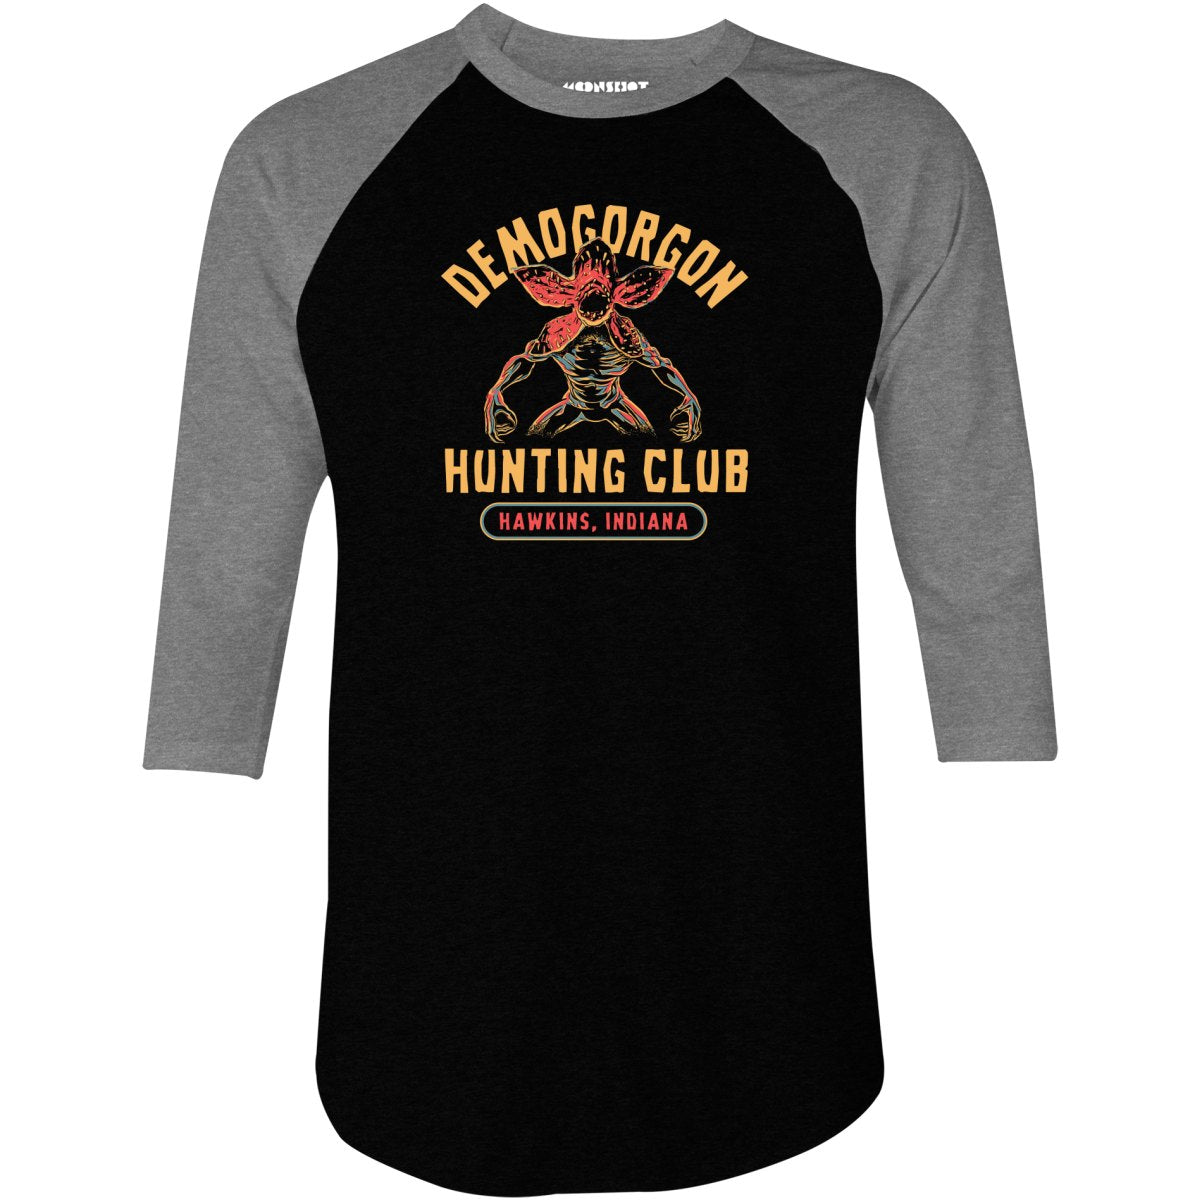 Demogorgon Hunting Club - 3/4 Sleeve Raglan T-Shirt